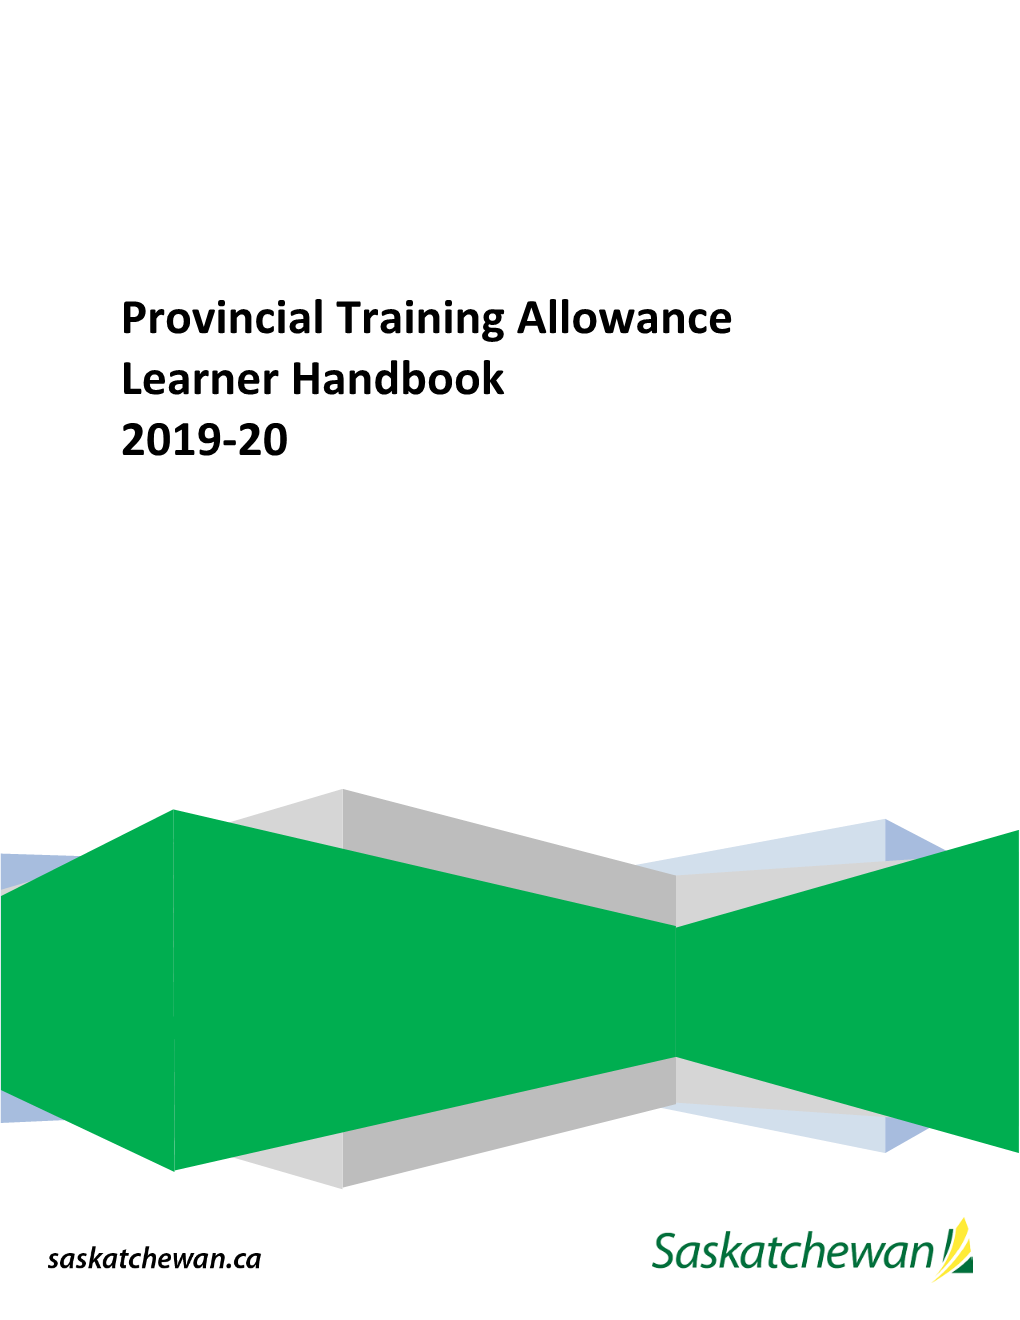 Provincial Training Allowance Learner Handbook 2019-20